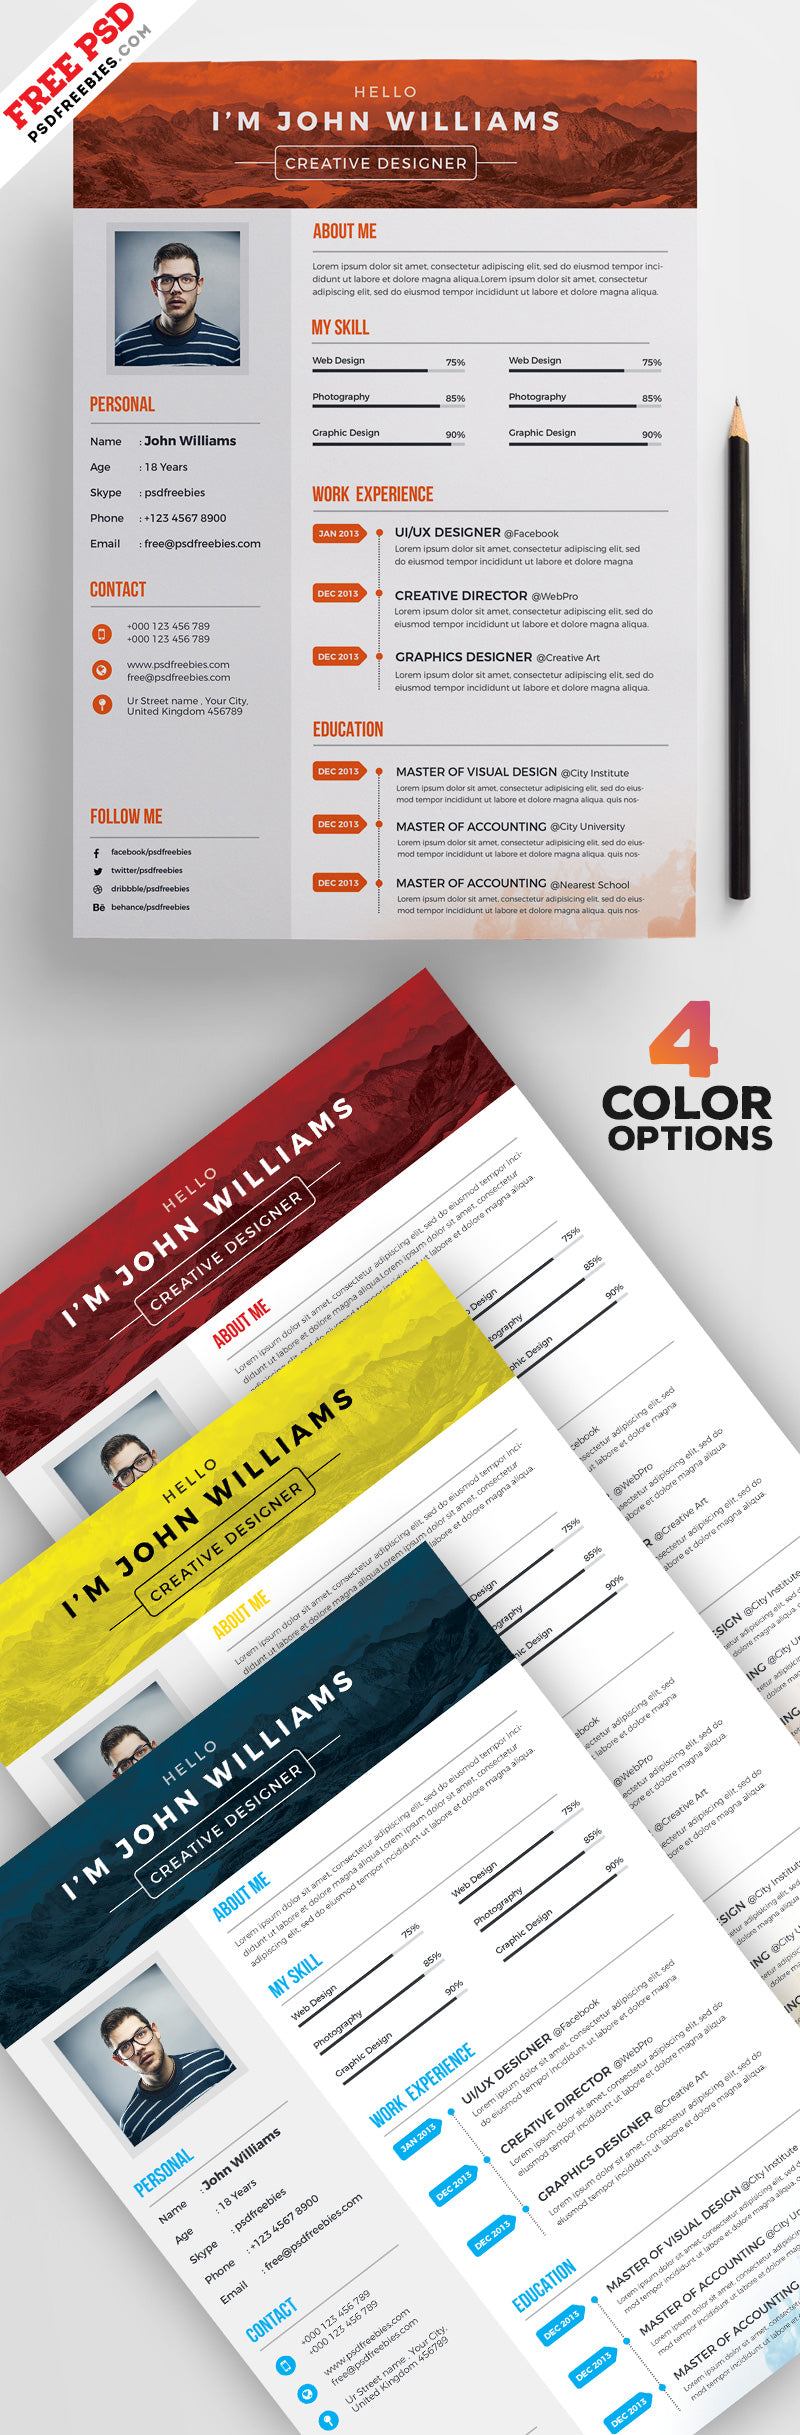 Free 4 Creative CV Resume Design Templates Set in Photoshop (PSD) Format